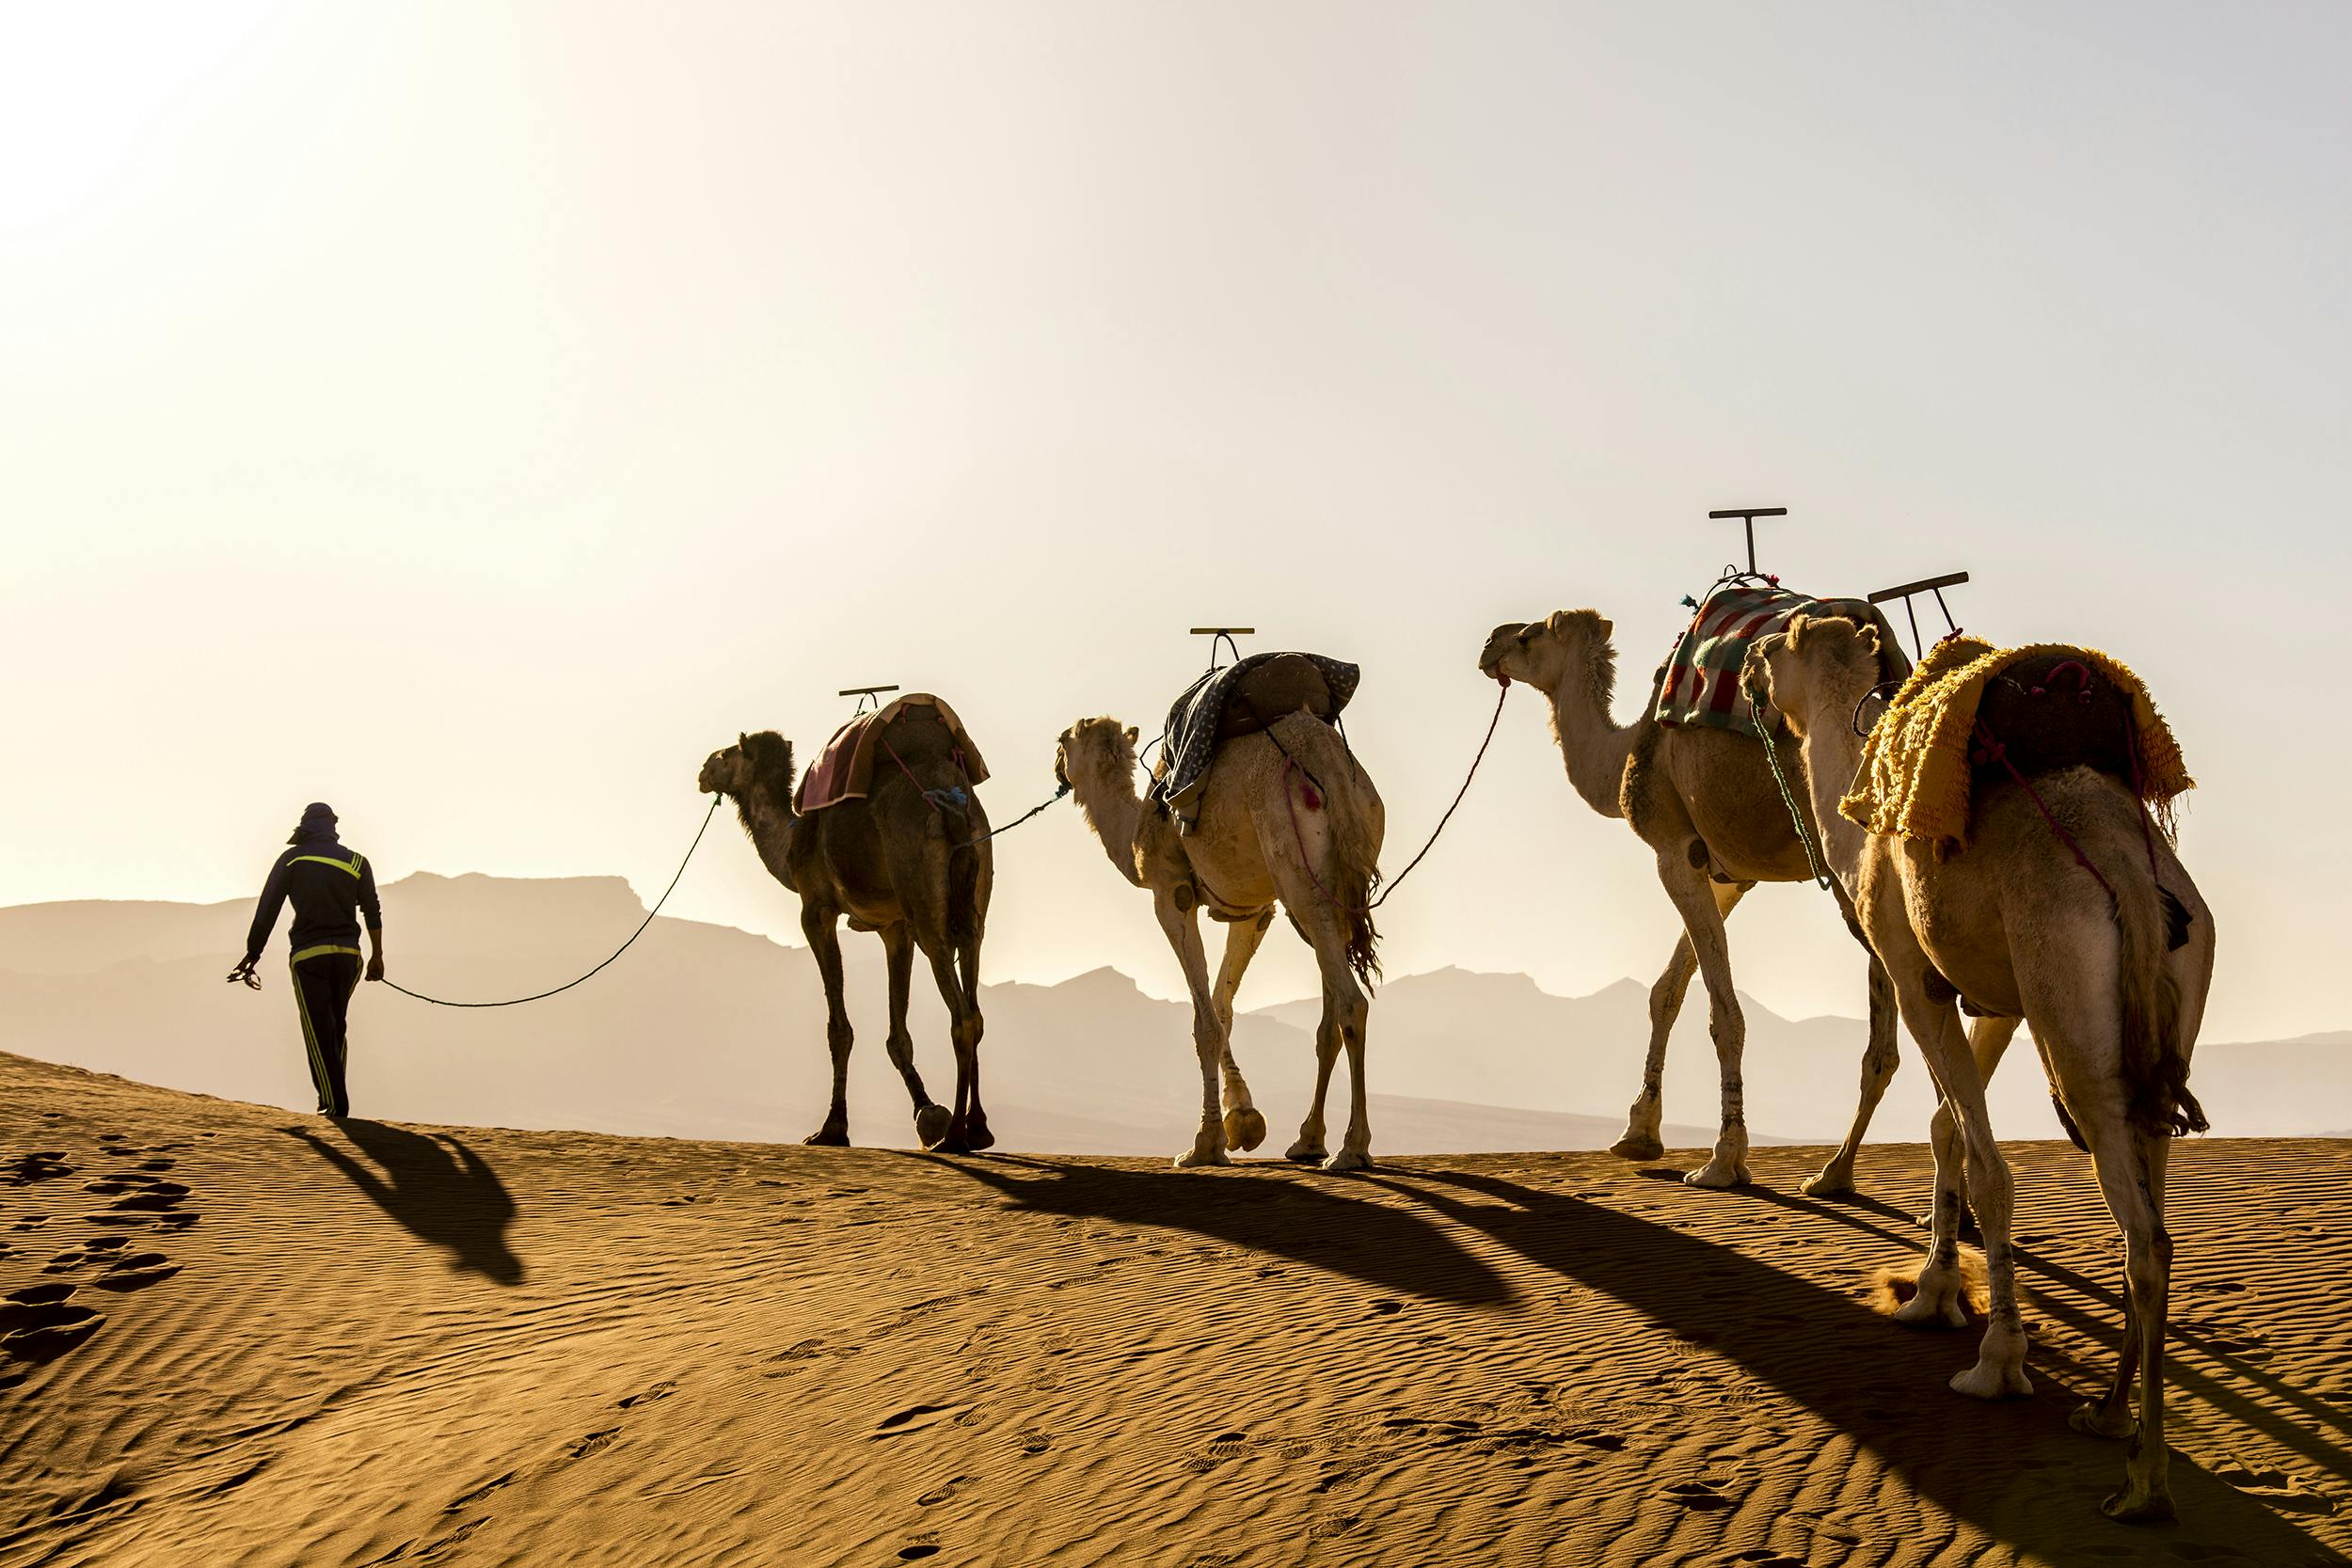 Desert Camel Safari at Agafay